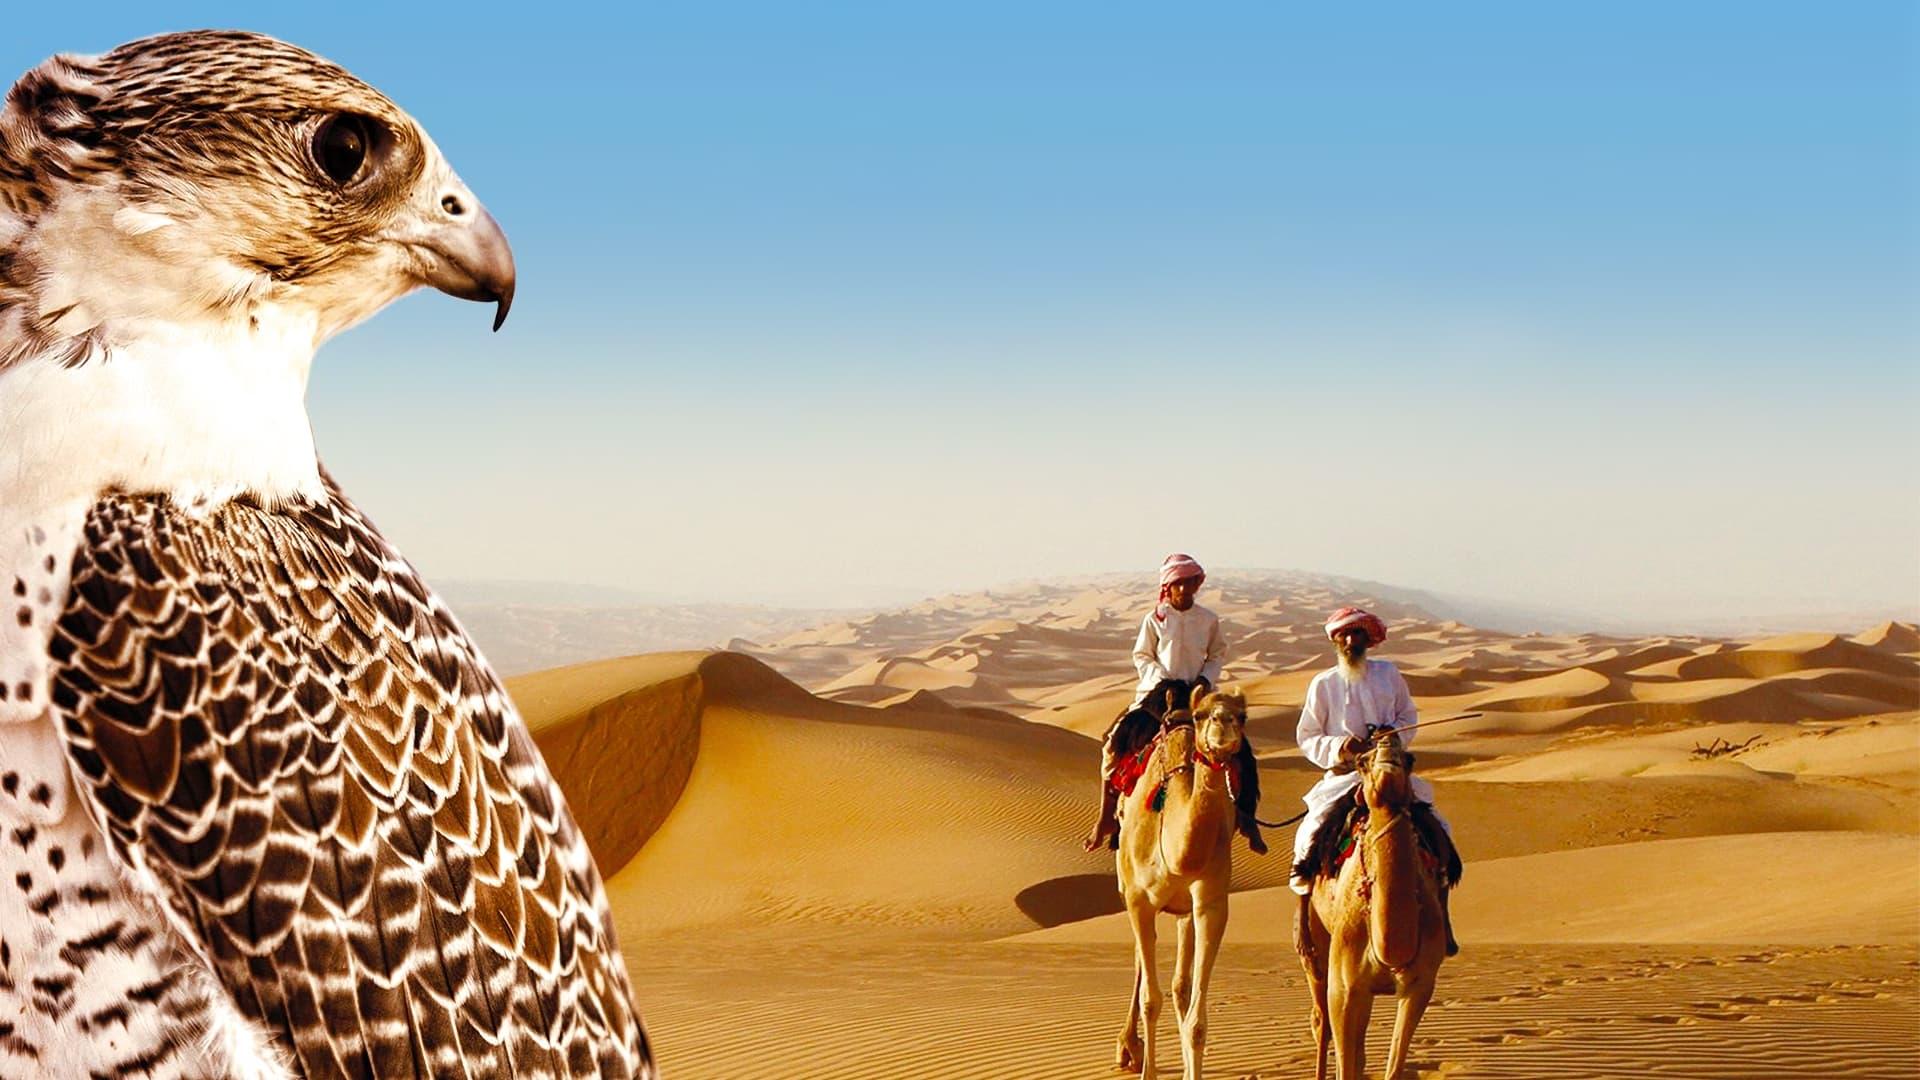 Wild Arabia backdrop